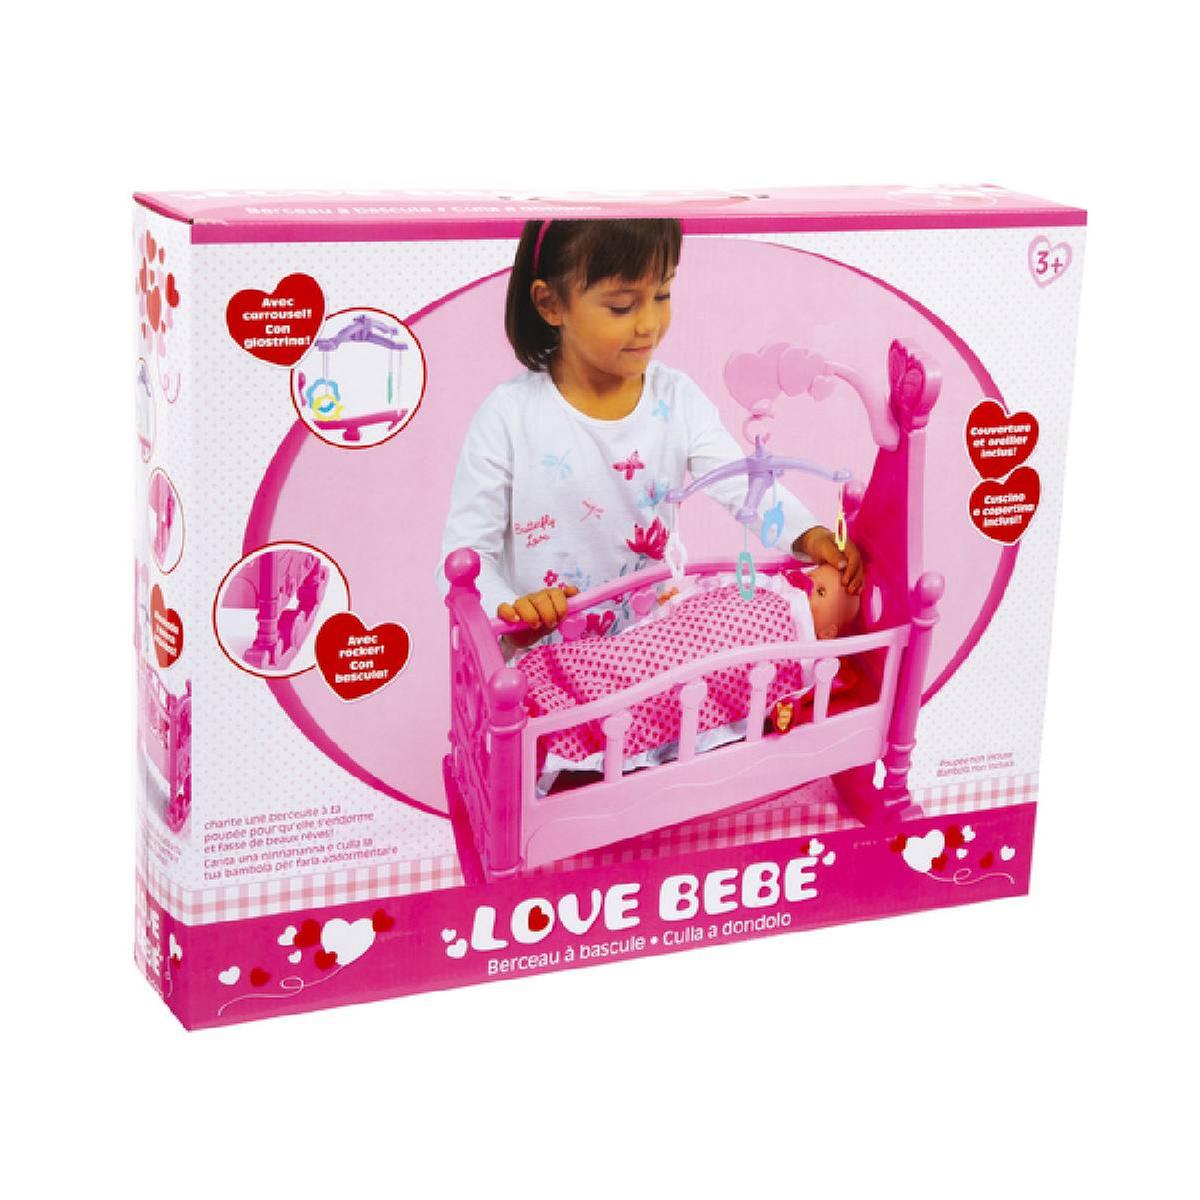 Love Bebé - Cuna de muñecas | Catálogo Navidad | Toys"R"Us España